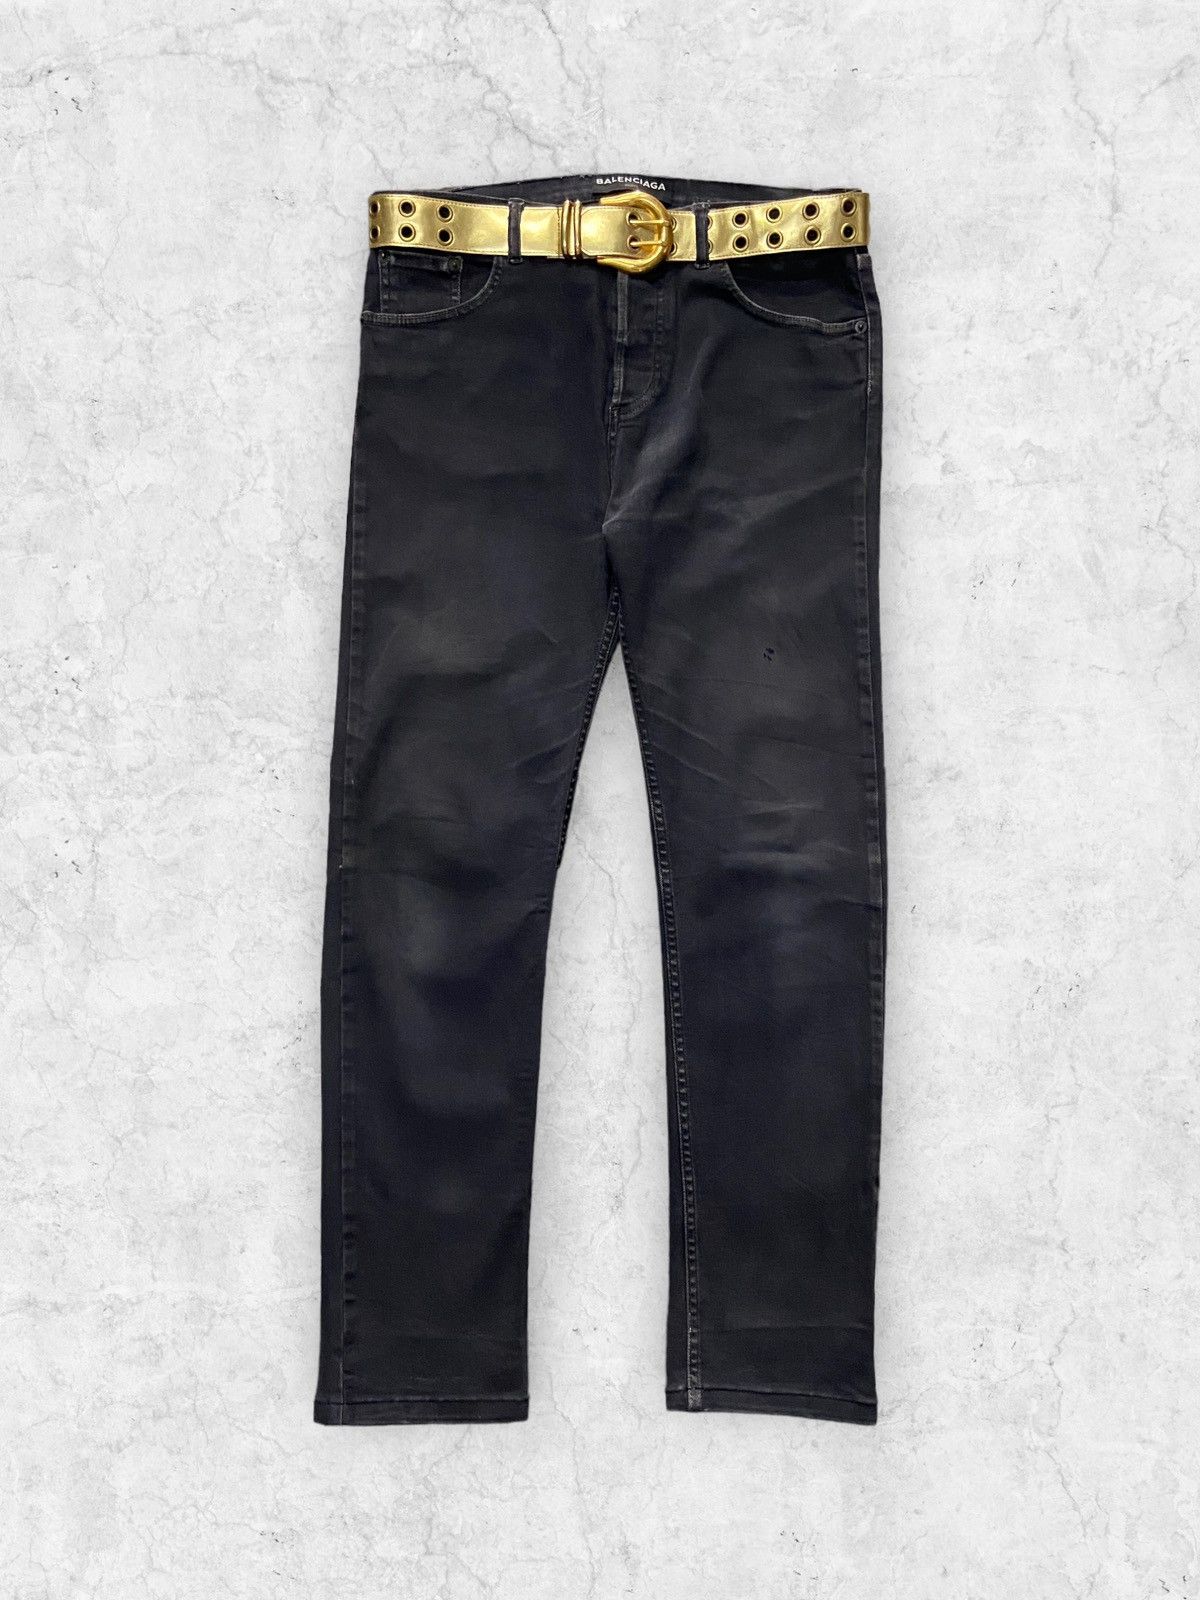 Balenciaga Black Faded Jeans